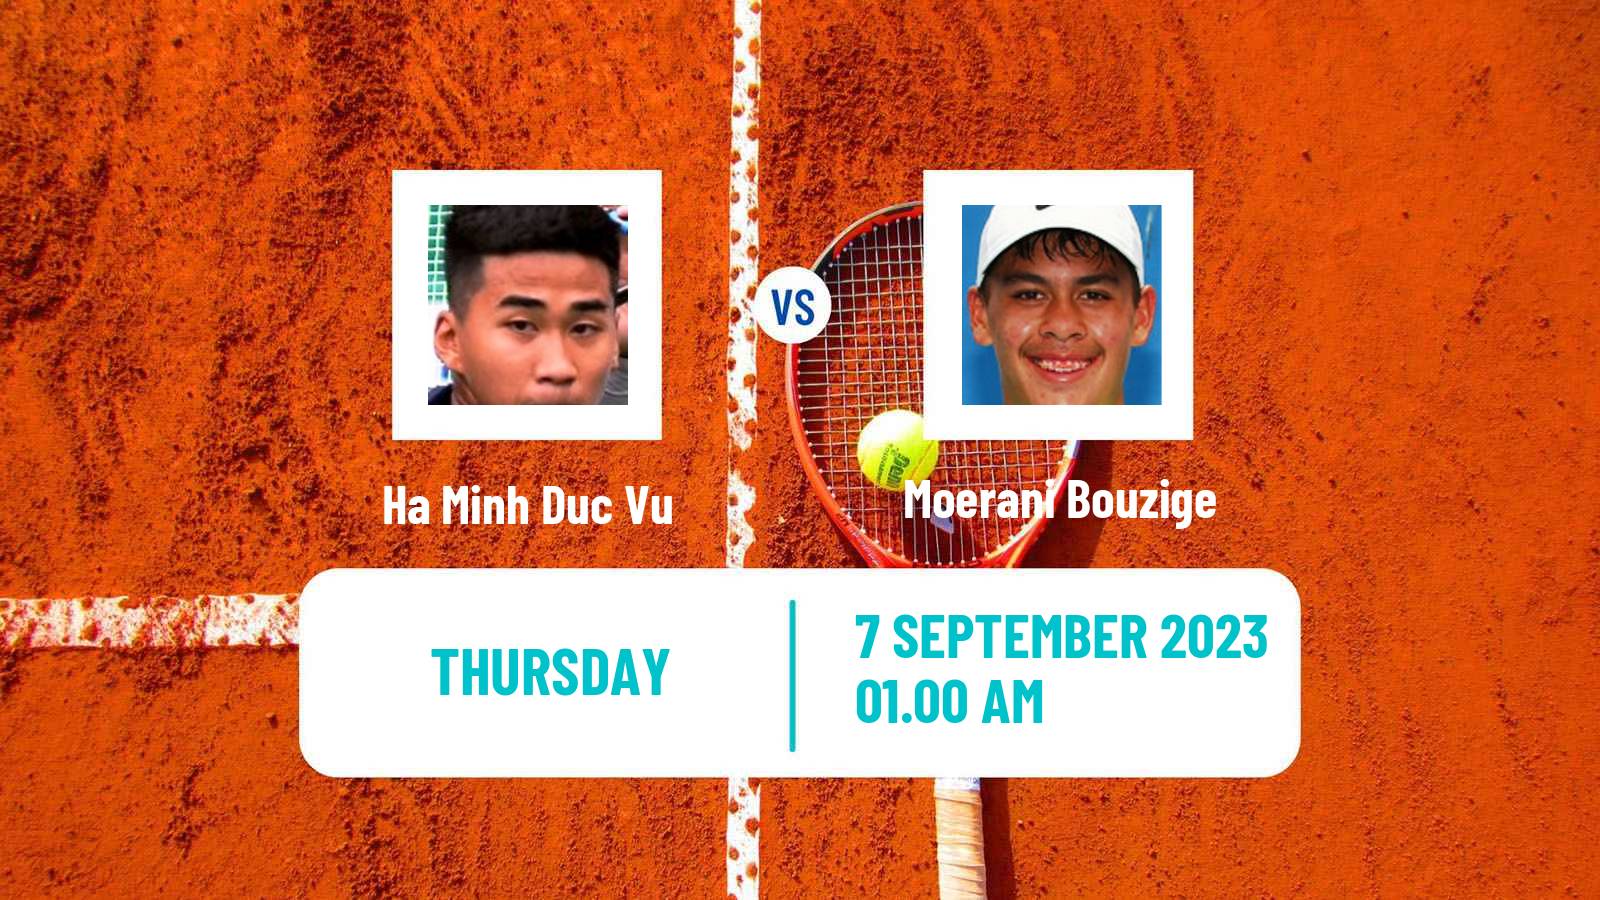 Tennis ITF M15 Nakhon Si Thammarat 8 Men Ha Minh Duc Vu - Moerani Bouzige